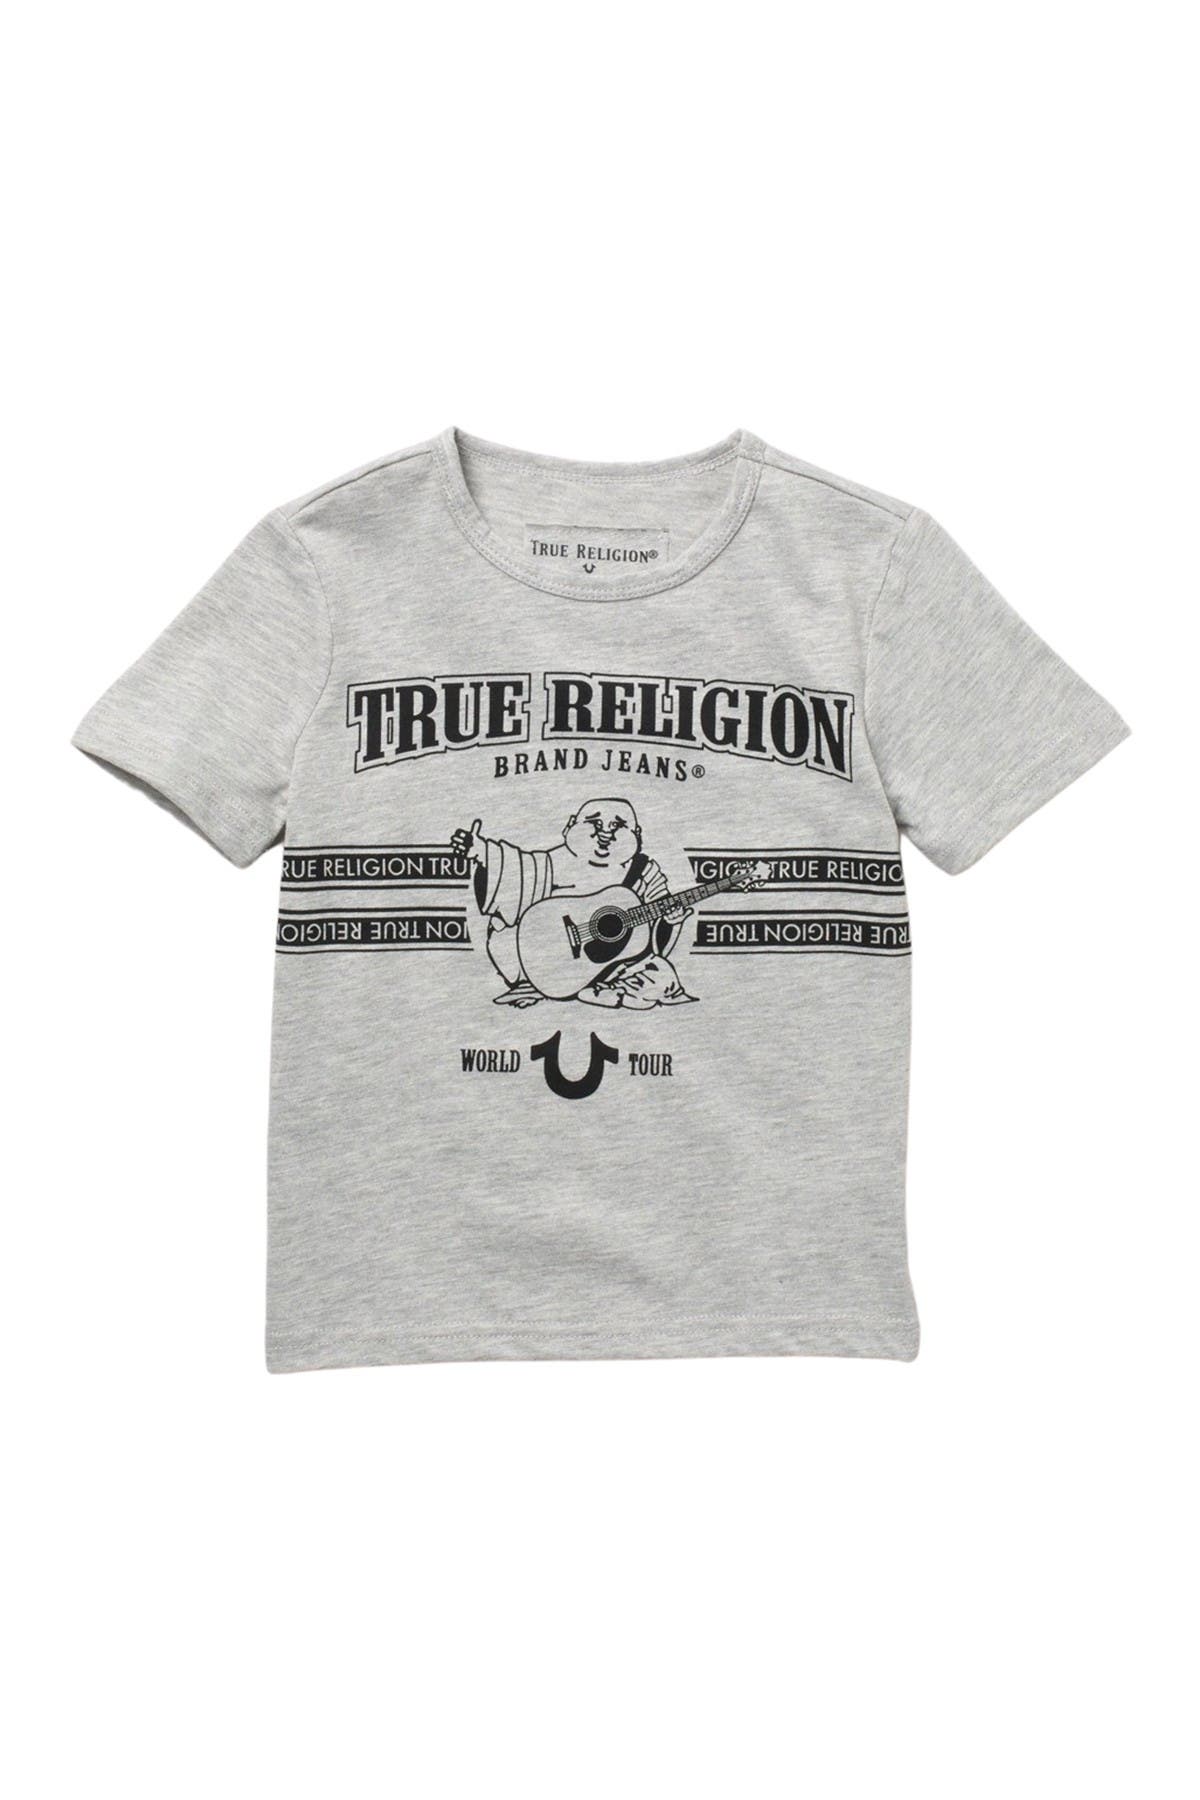 true religion nordstrom rack